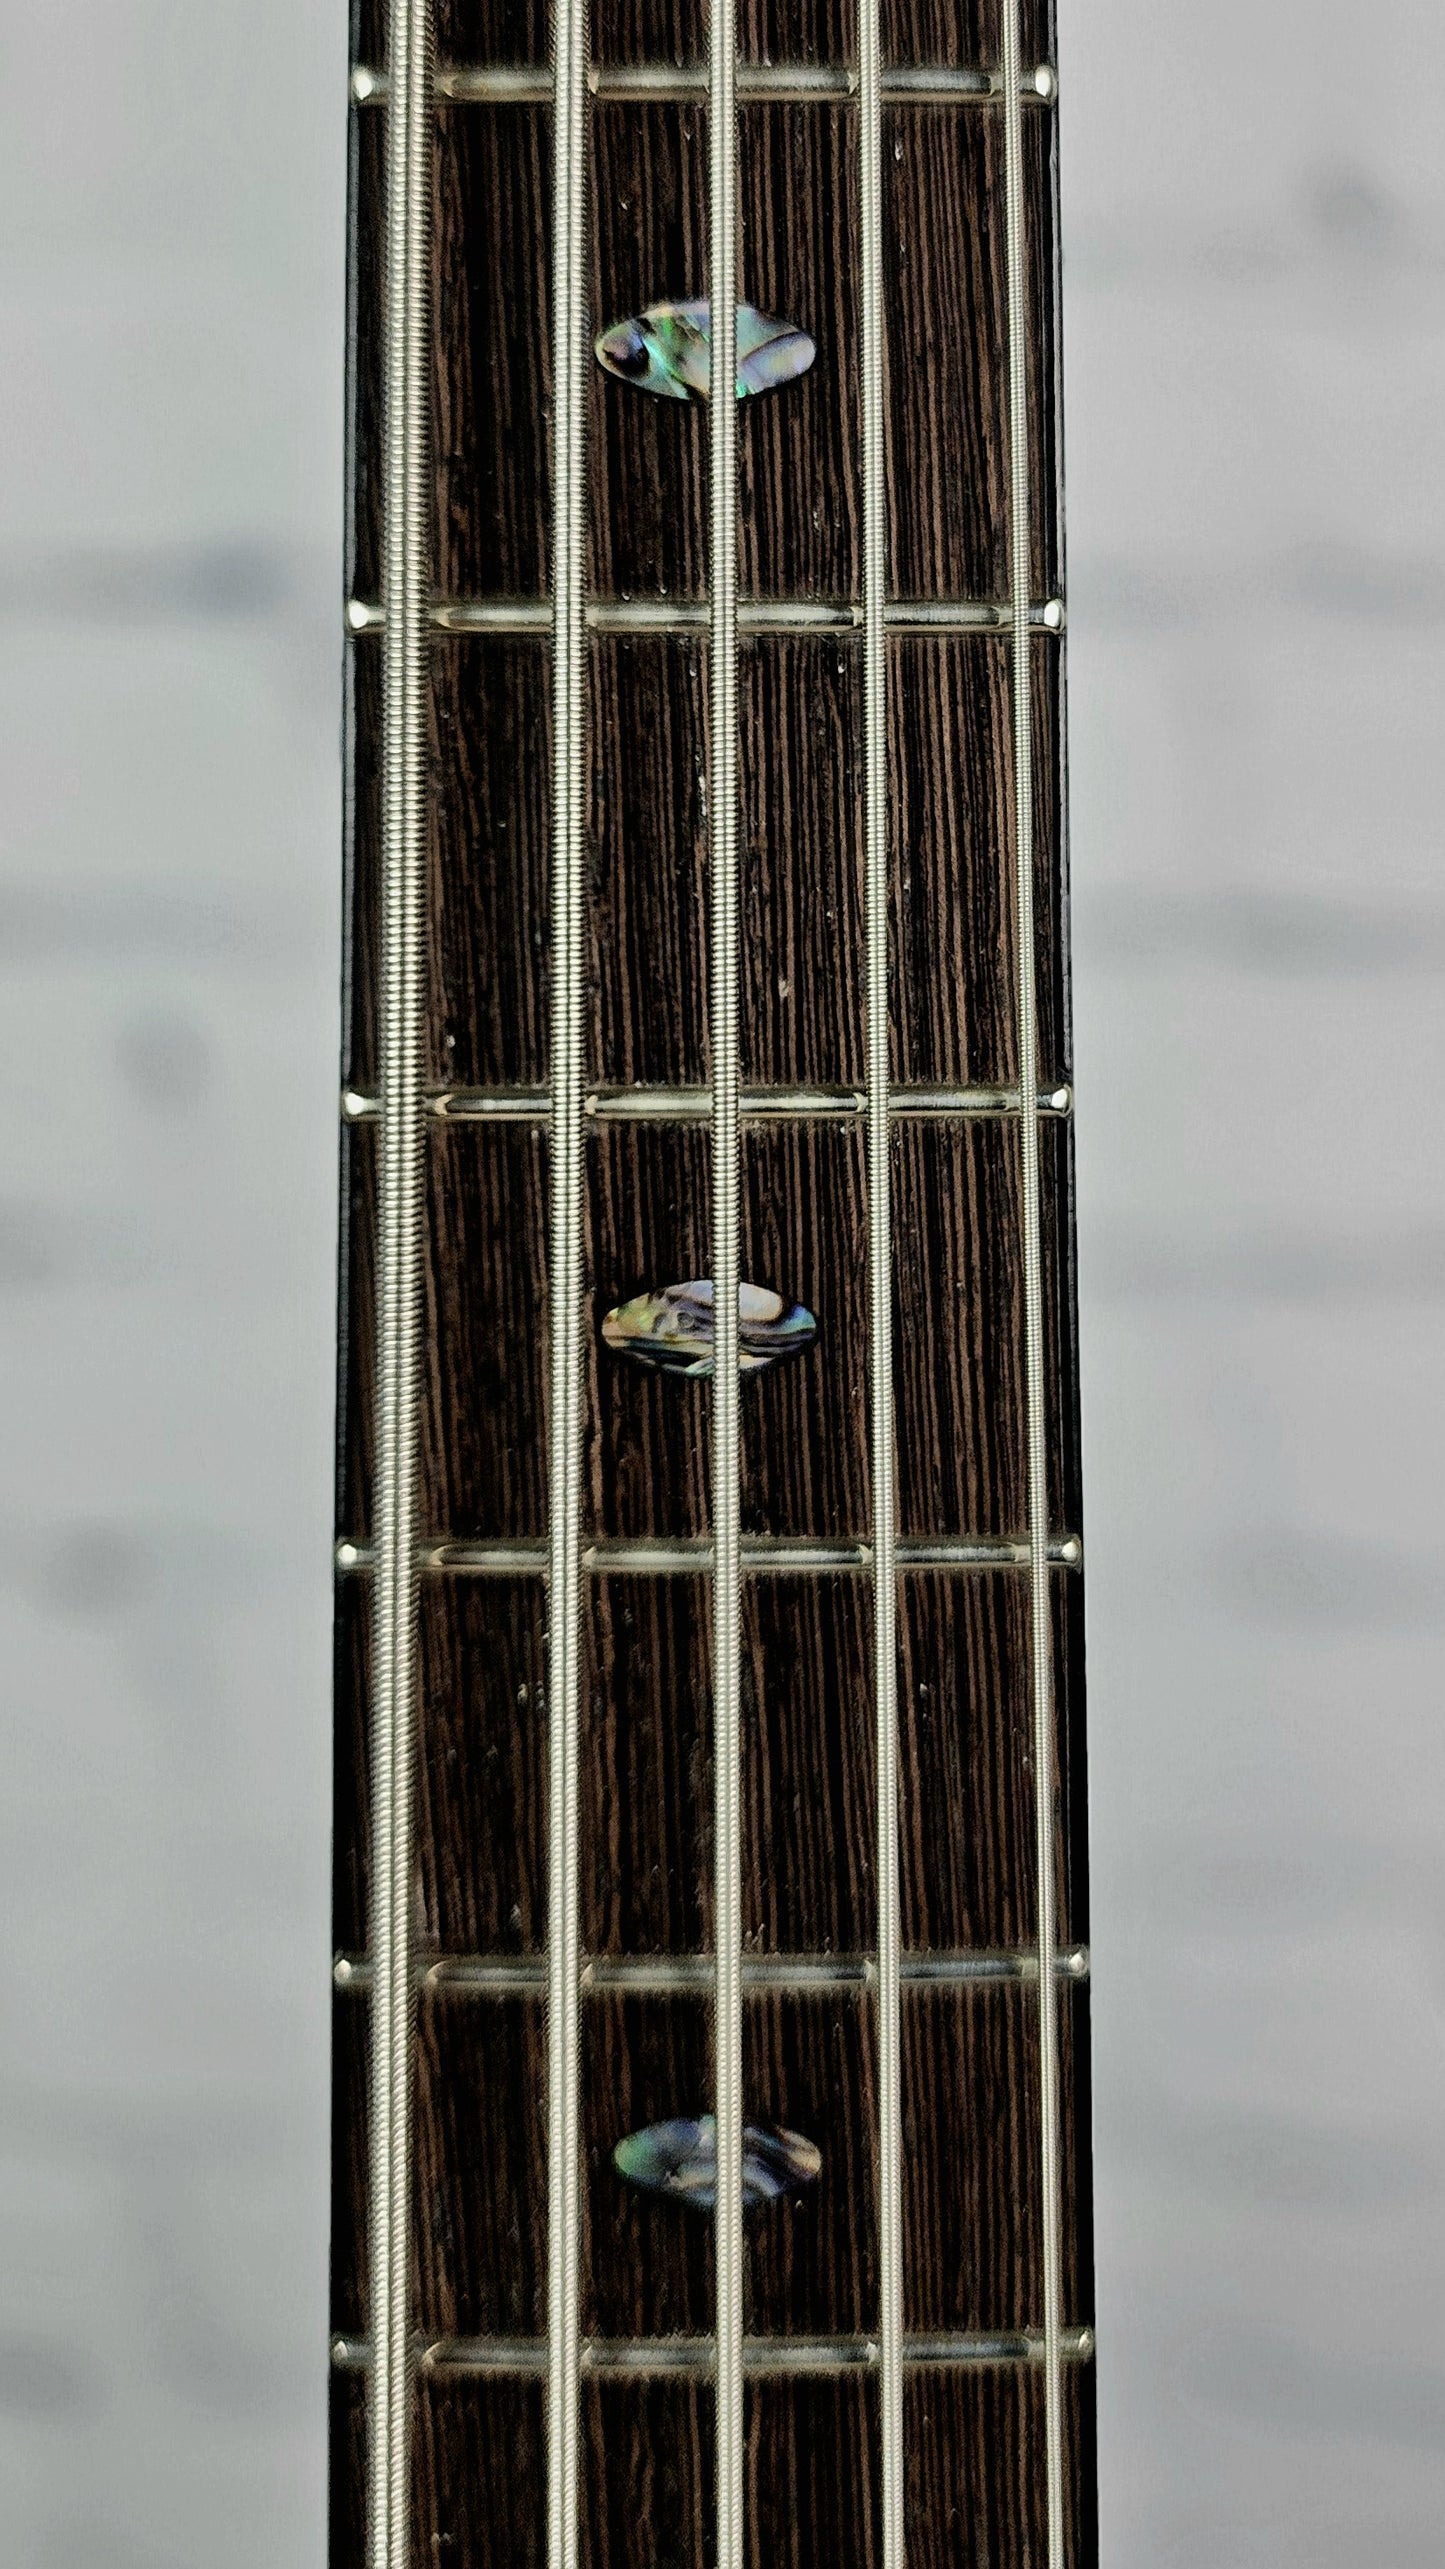 Ibanez SR1605DW ASK 5 String Bass Guitar Autumn Sunset Sky